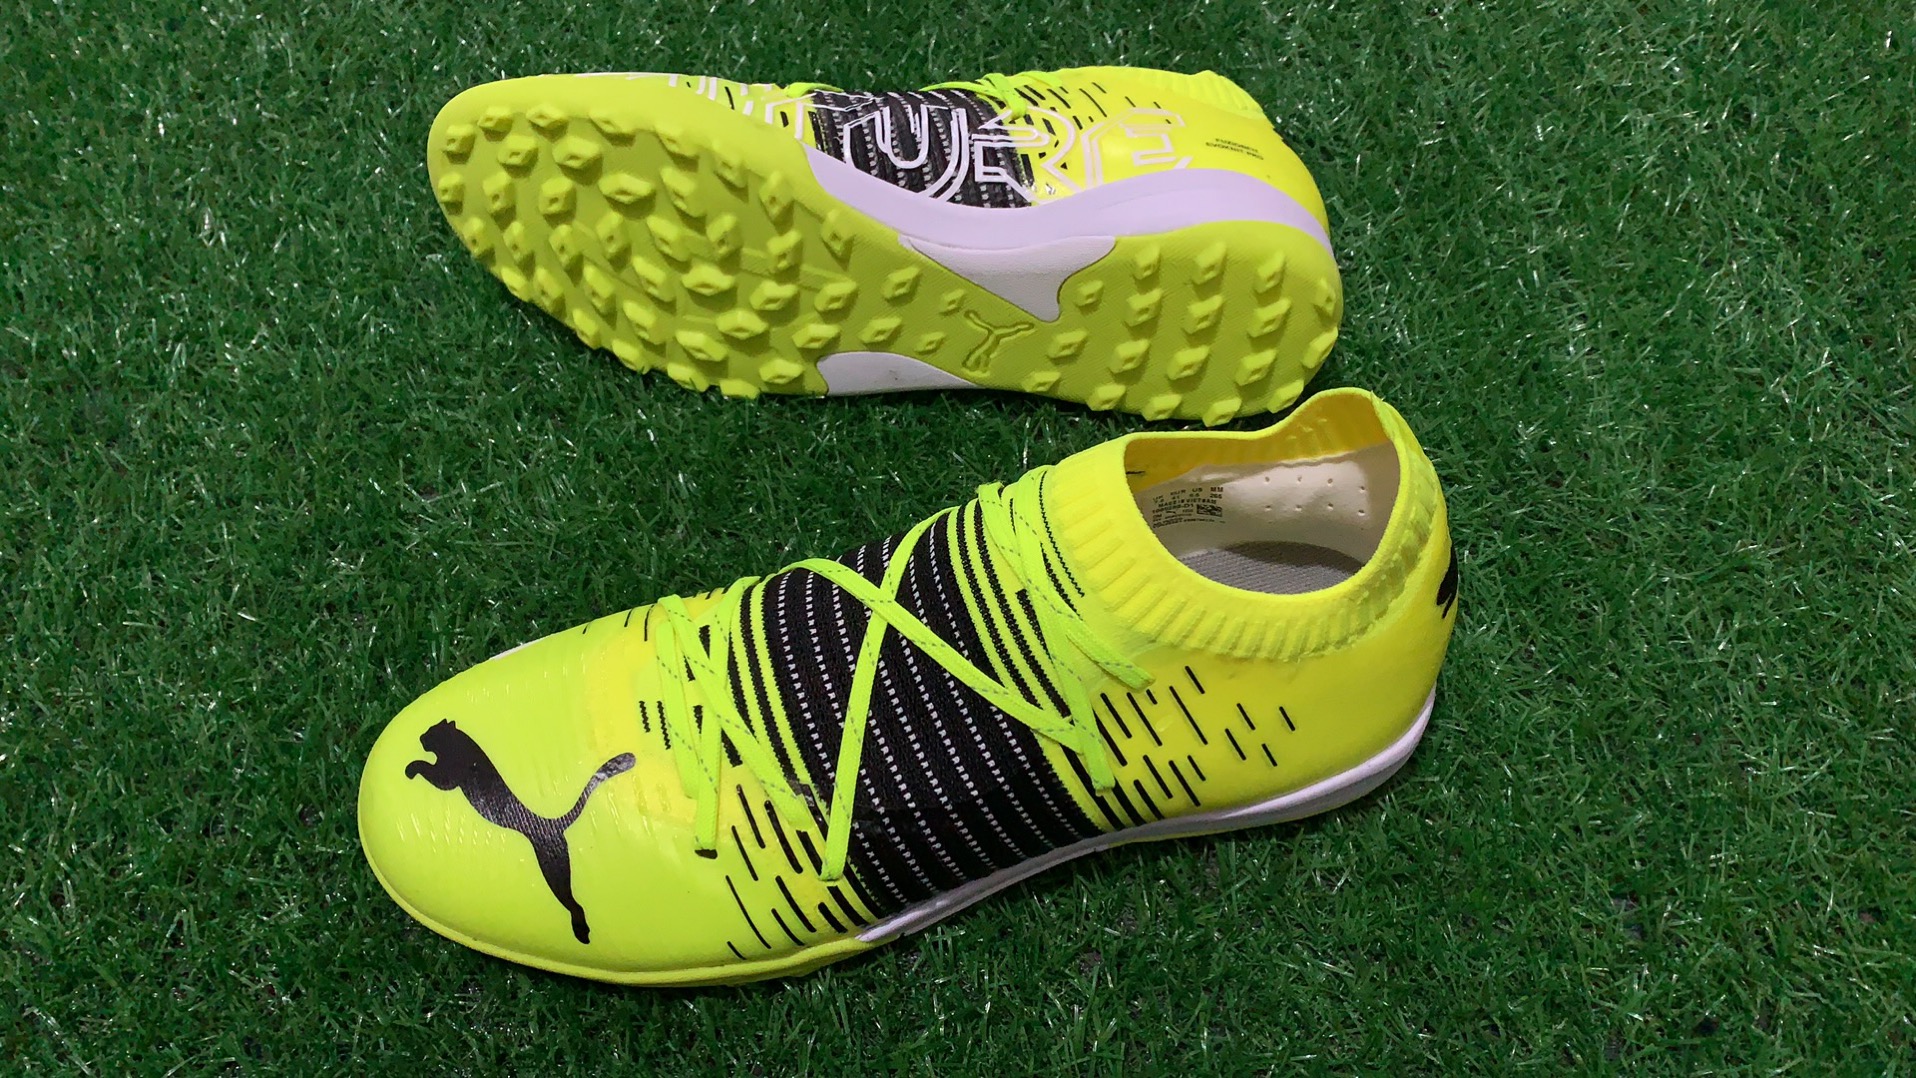 Puma Future Z 3.1 TT 'Yellow Alert' Soccer Shoes | Premium Performance Footwear